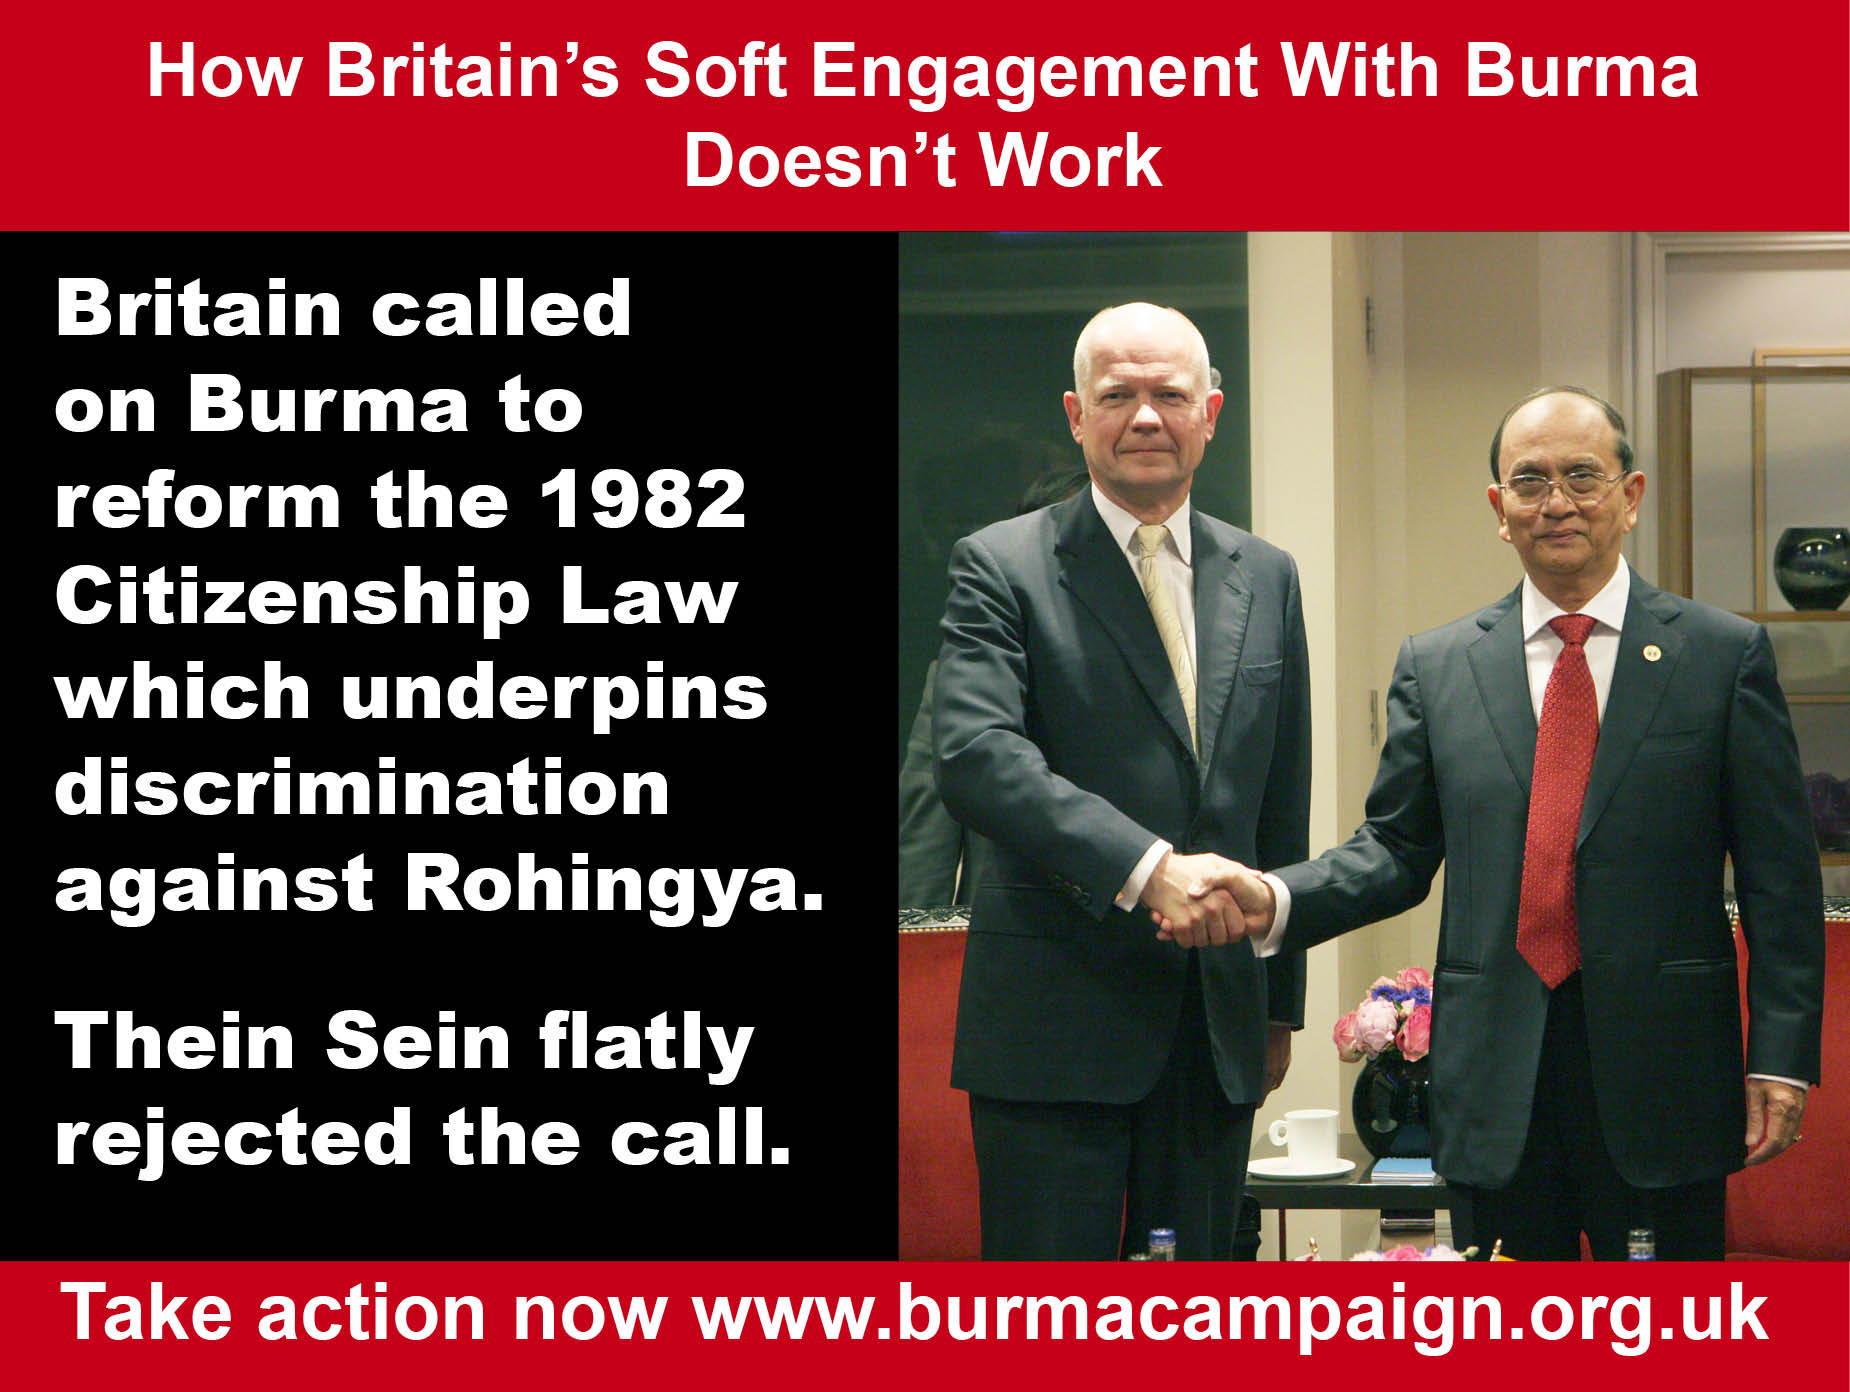 soft engagement doesn't work citizenship discrimination rohingya burma campaign UK